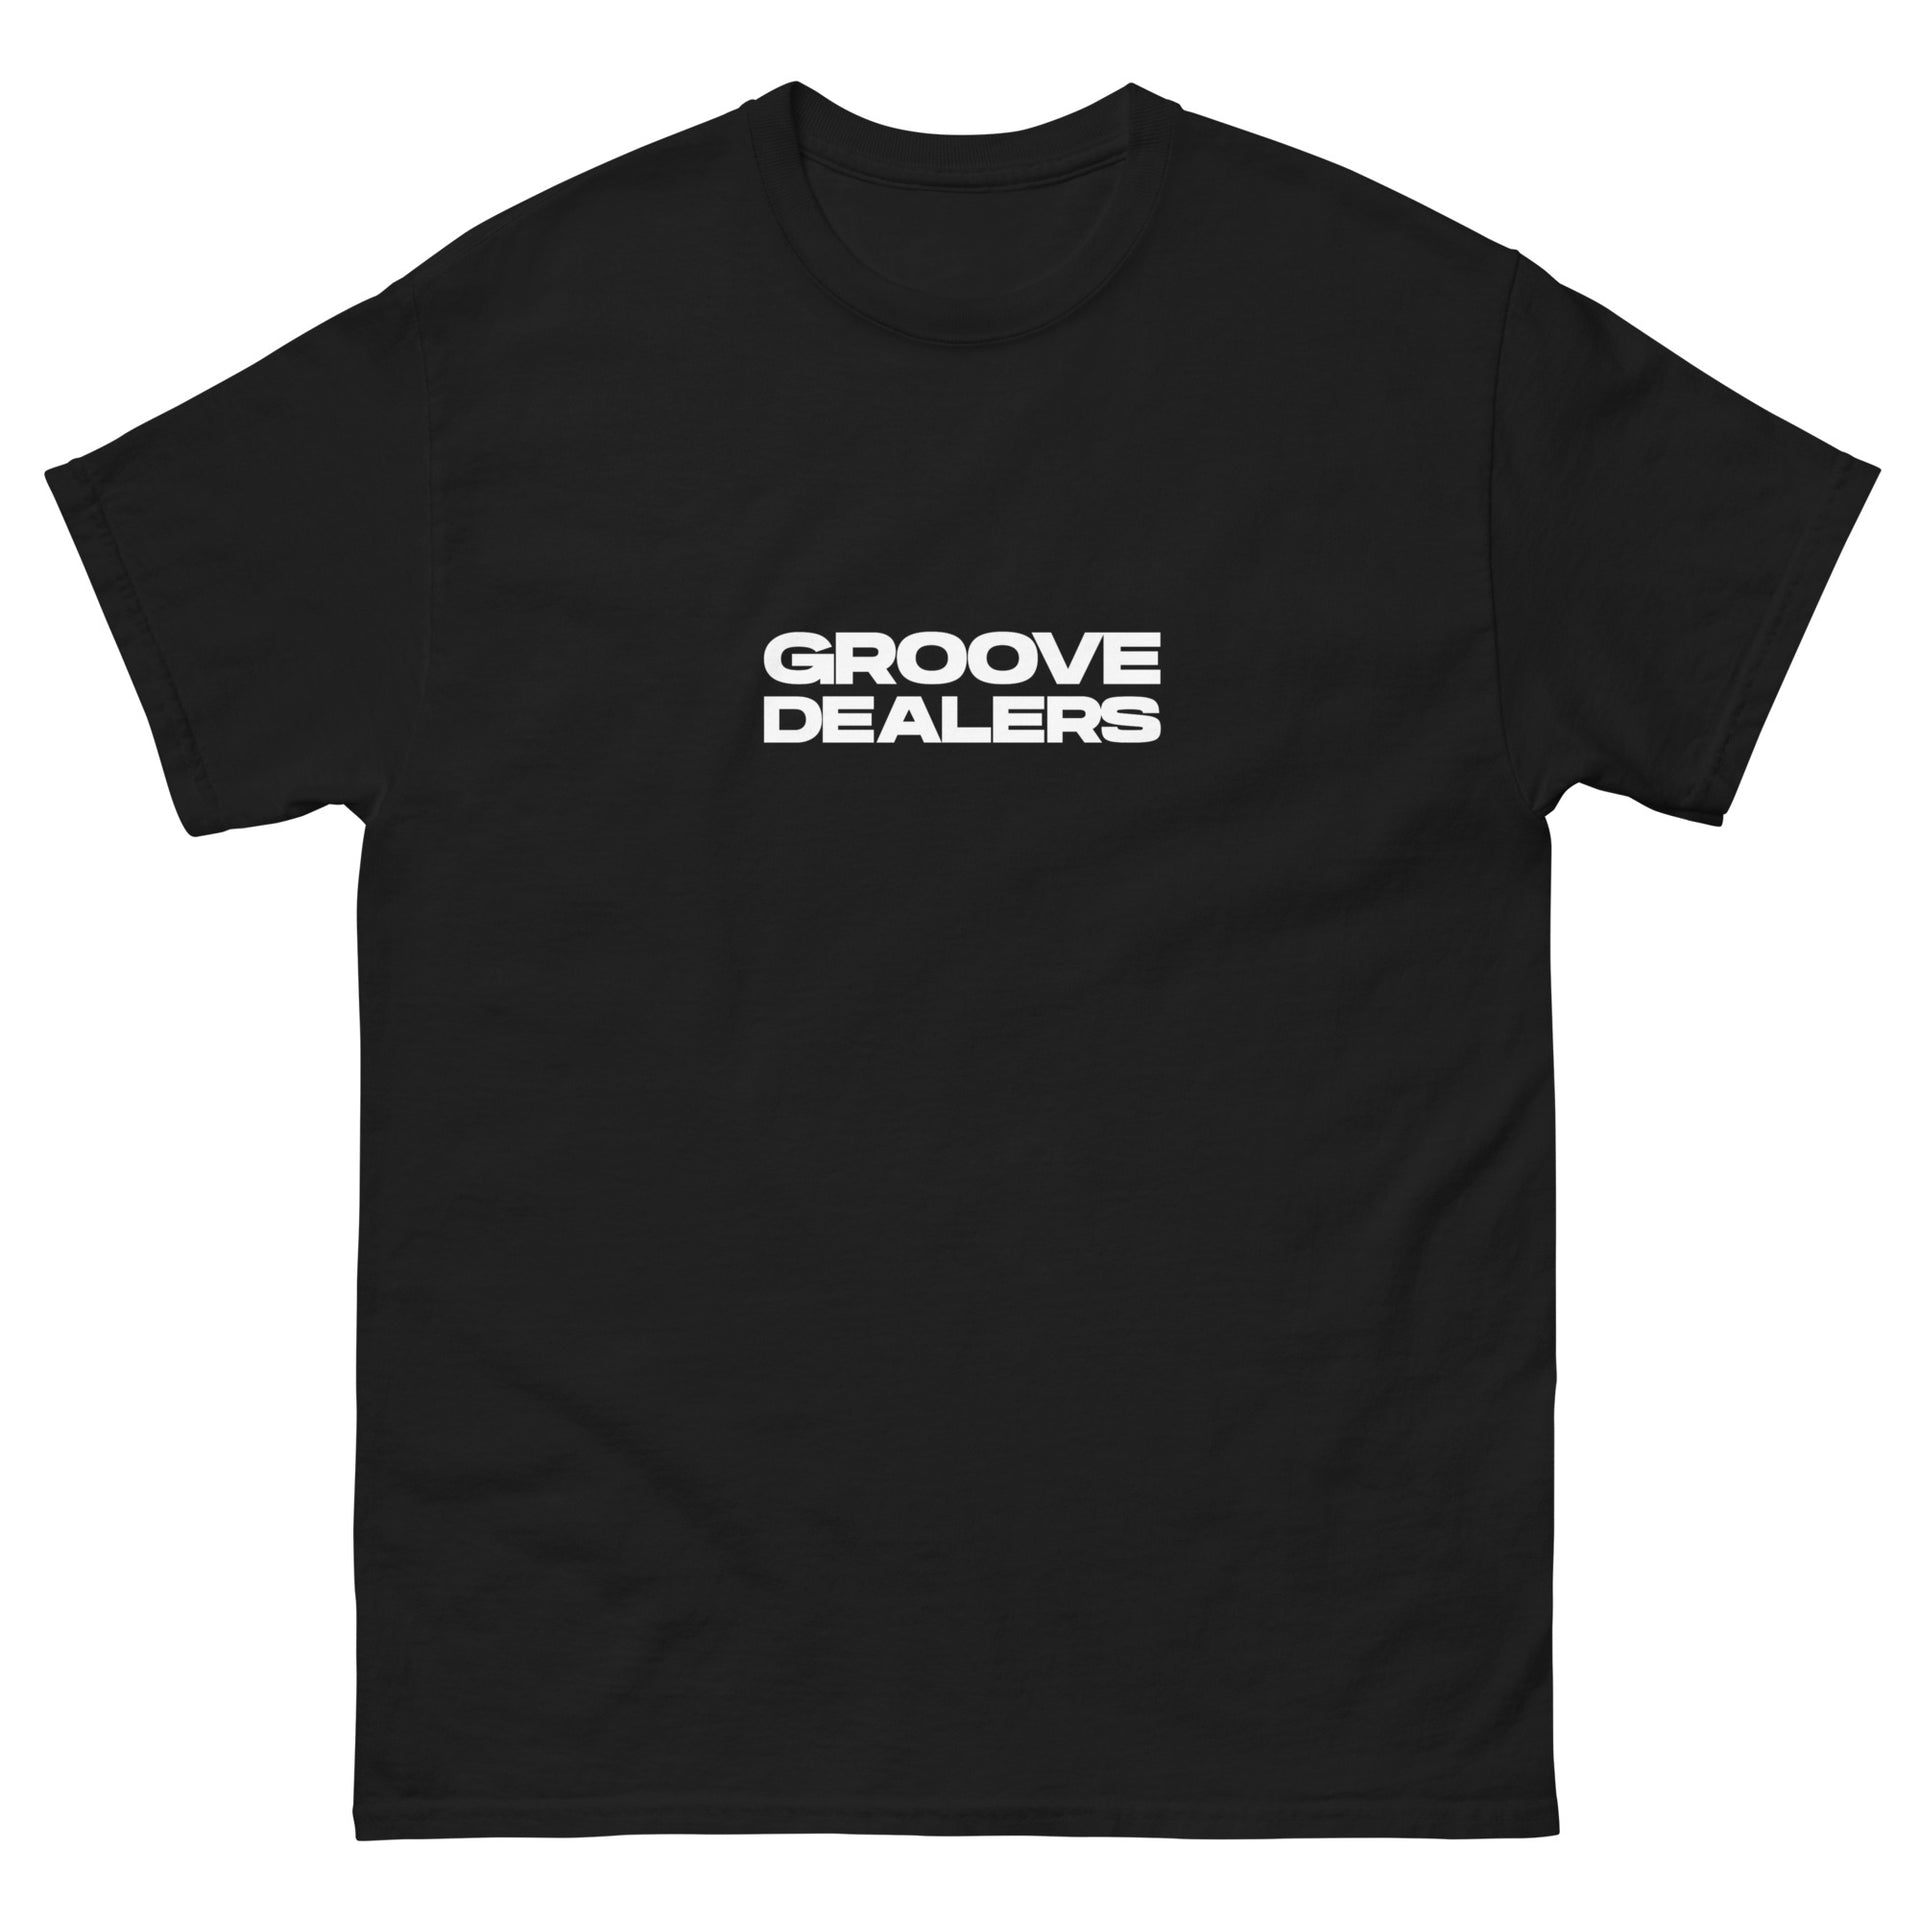 Groove Merch — Groove Fitness Studio LLC